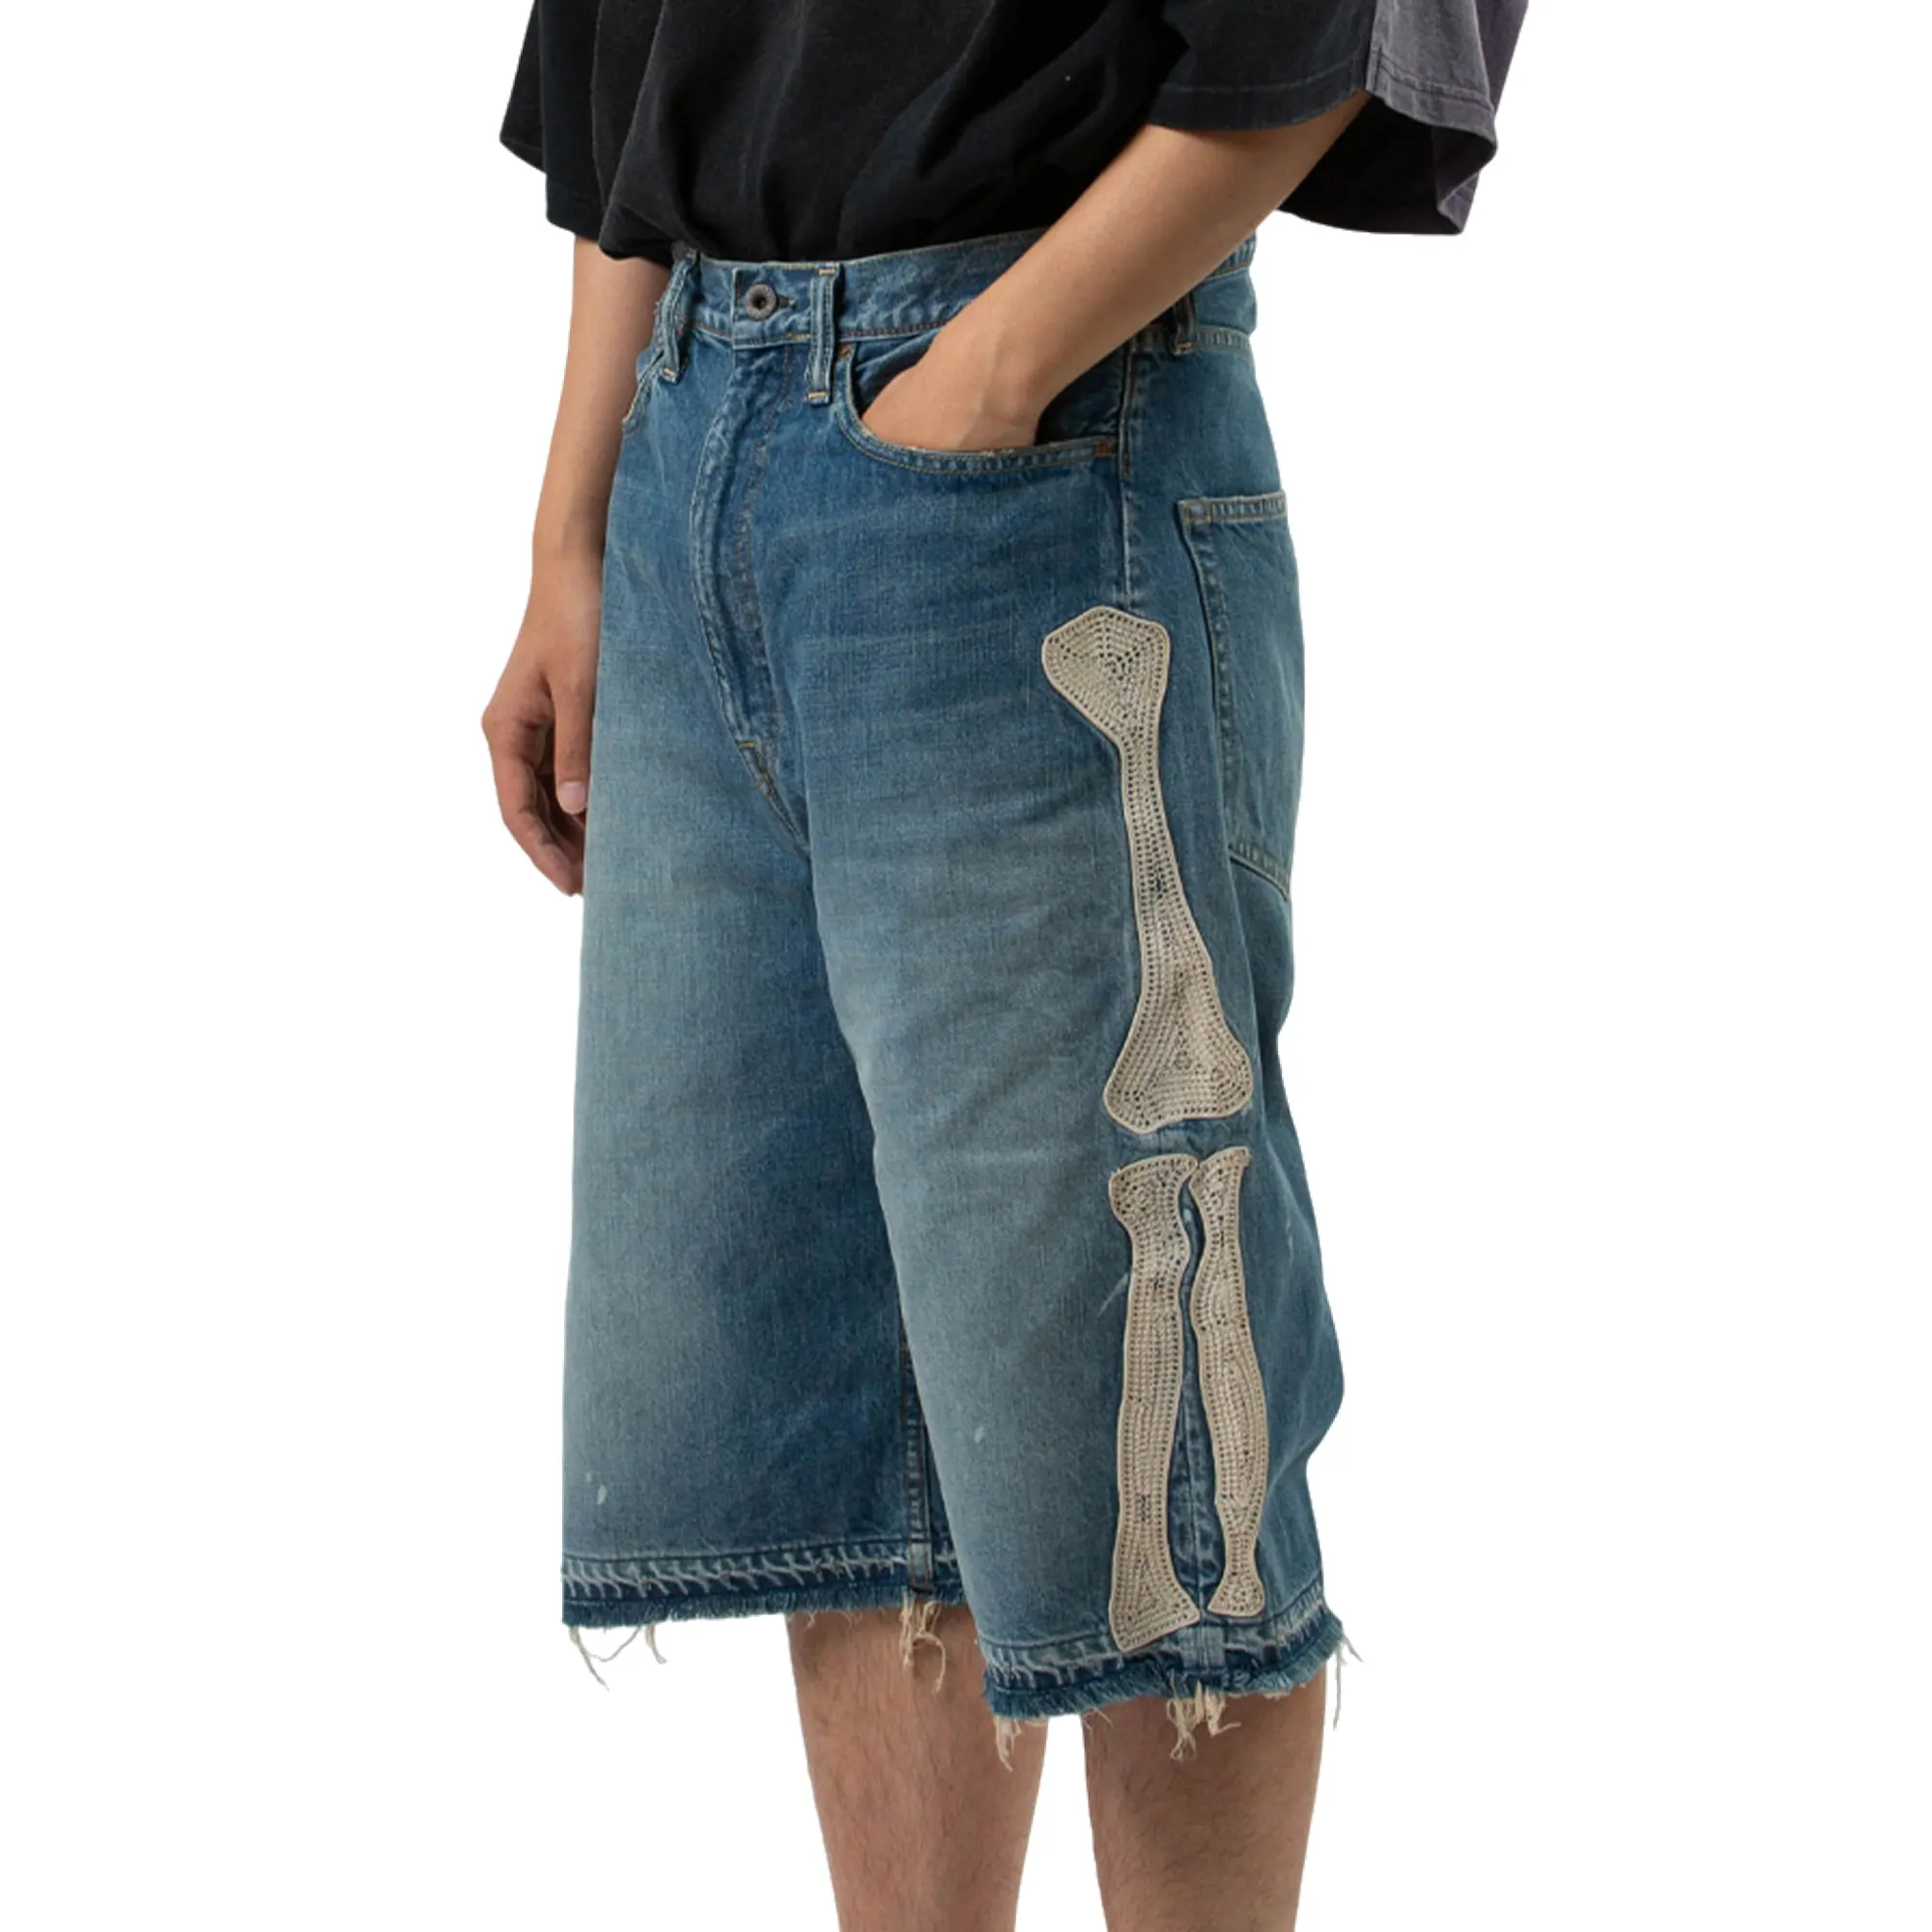 Summer Bone Embroidered Patch Male Jeans Shorts Raw Hem Men's Short Pants Jeans Denim Men Shorts